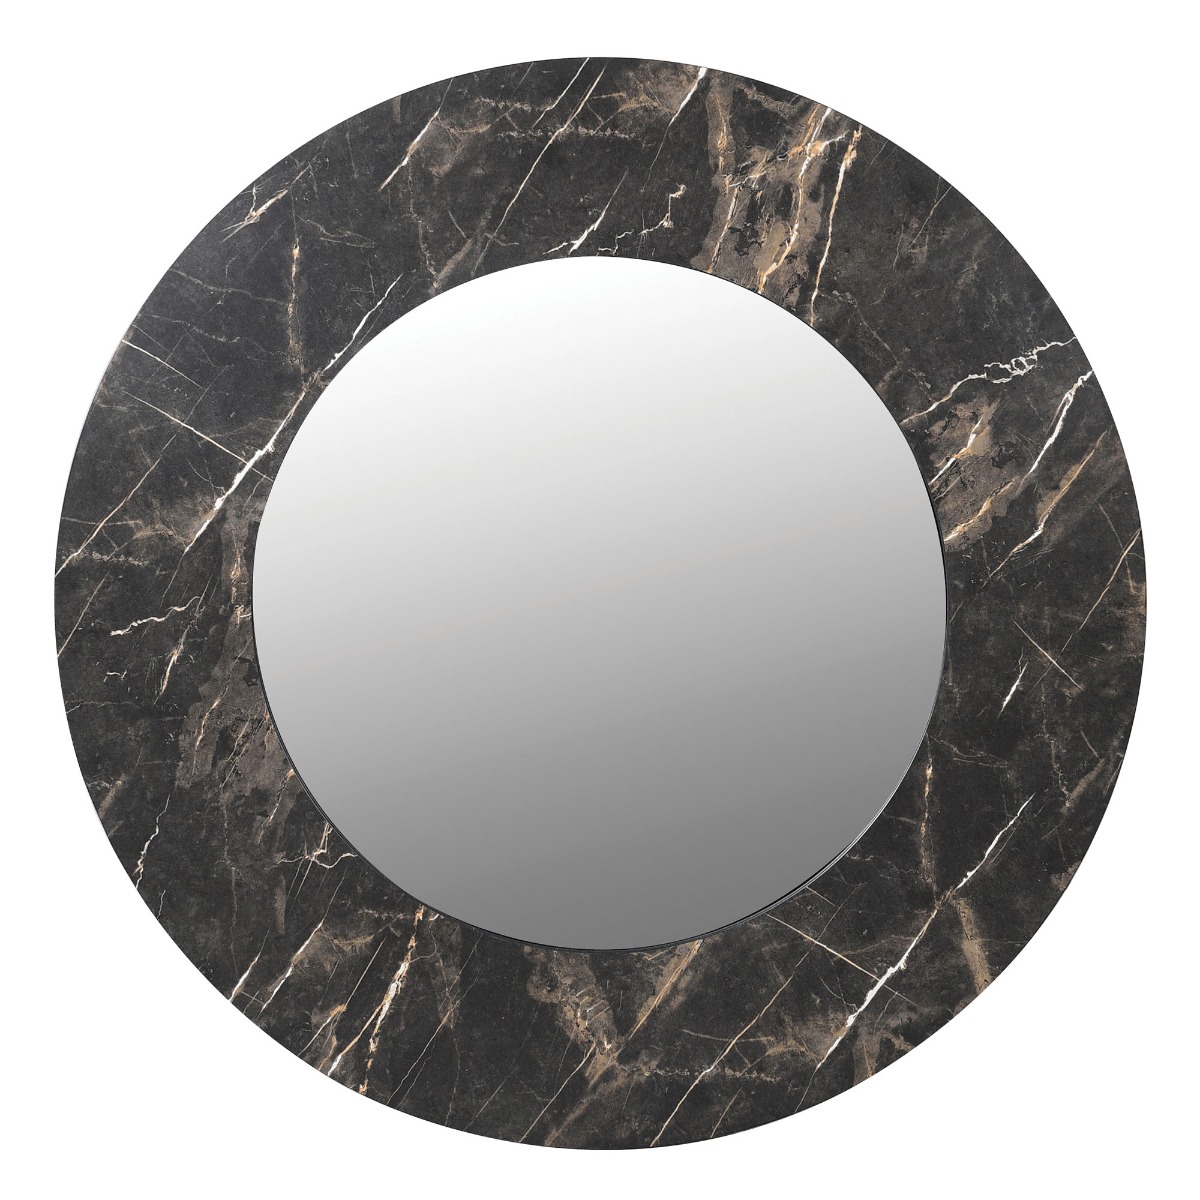 Marble Effect Mirror, Round, Black Wood | Barker & Stonehouse